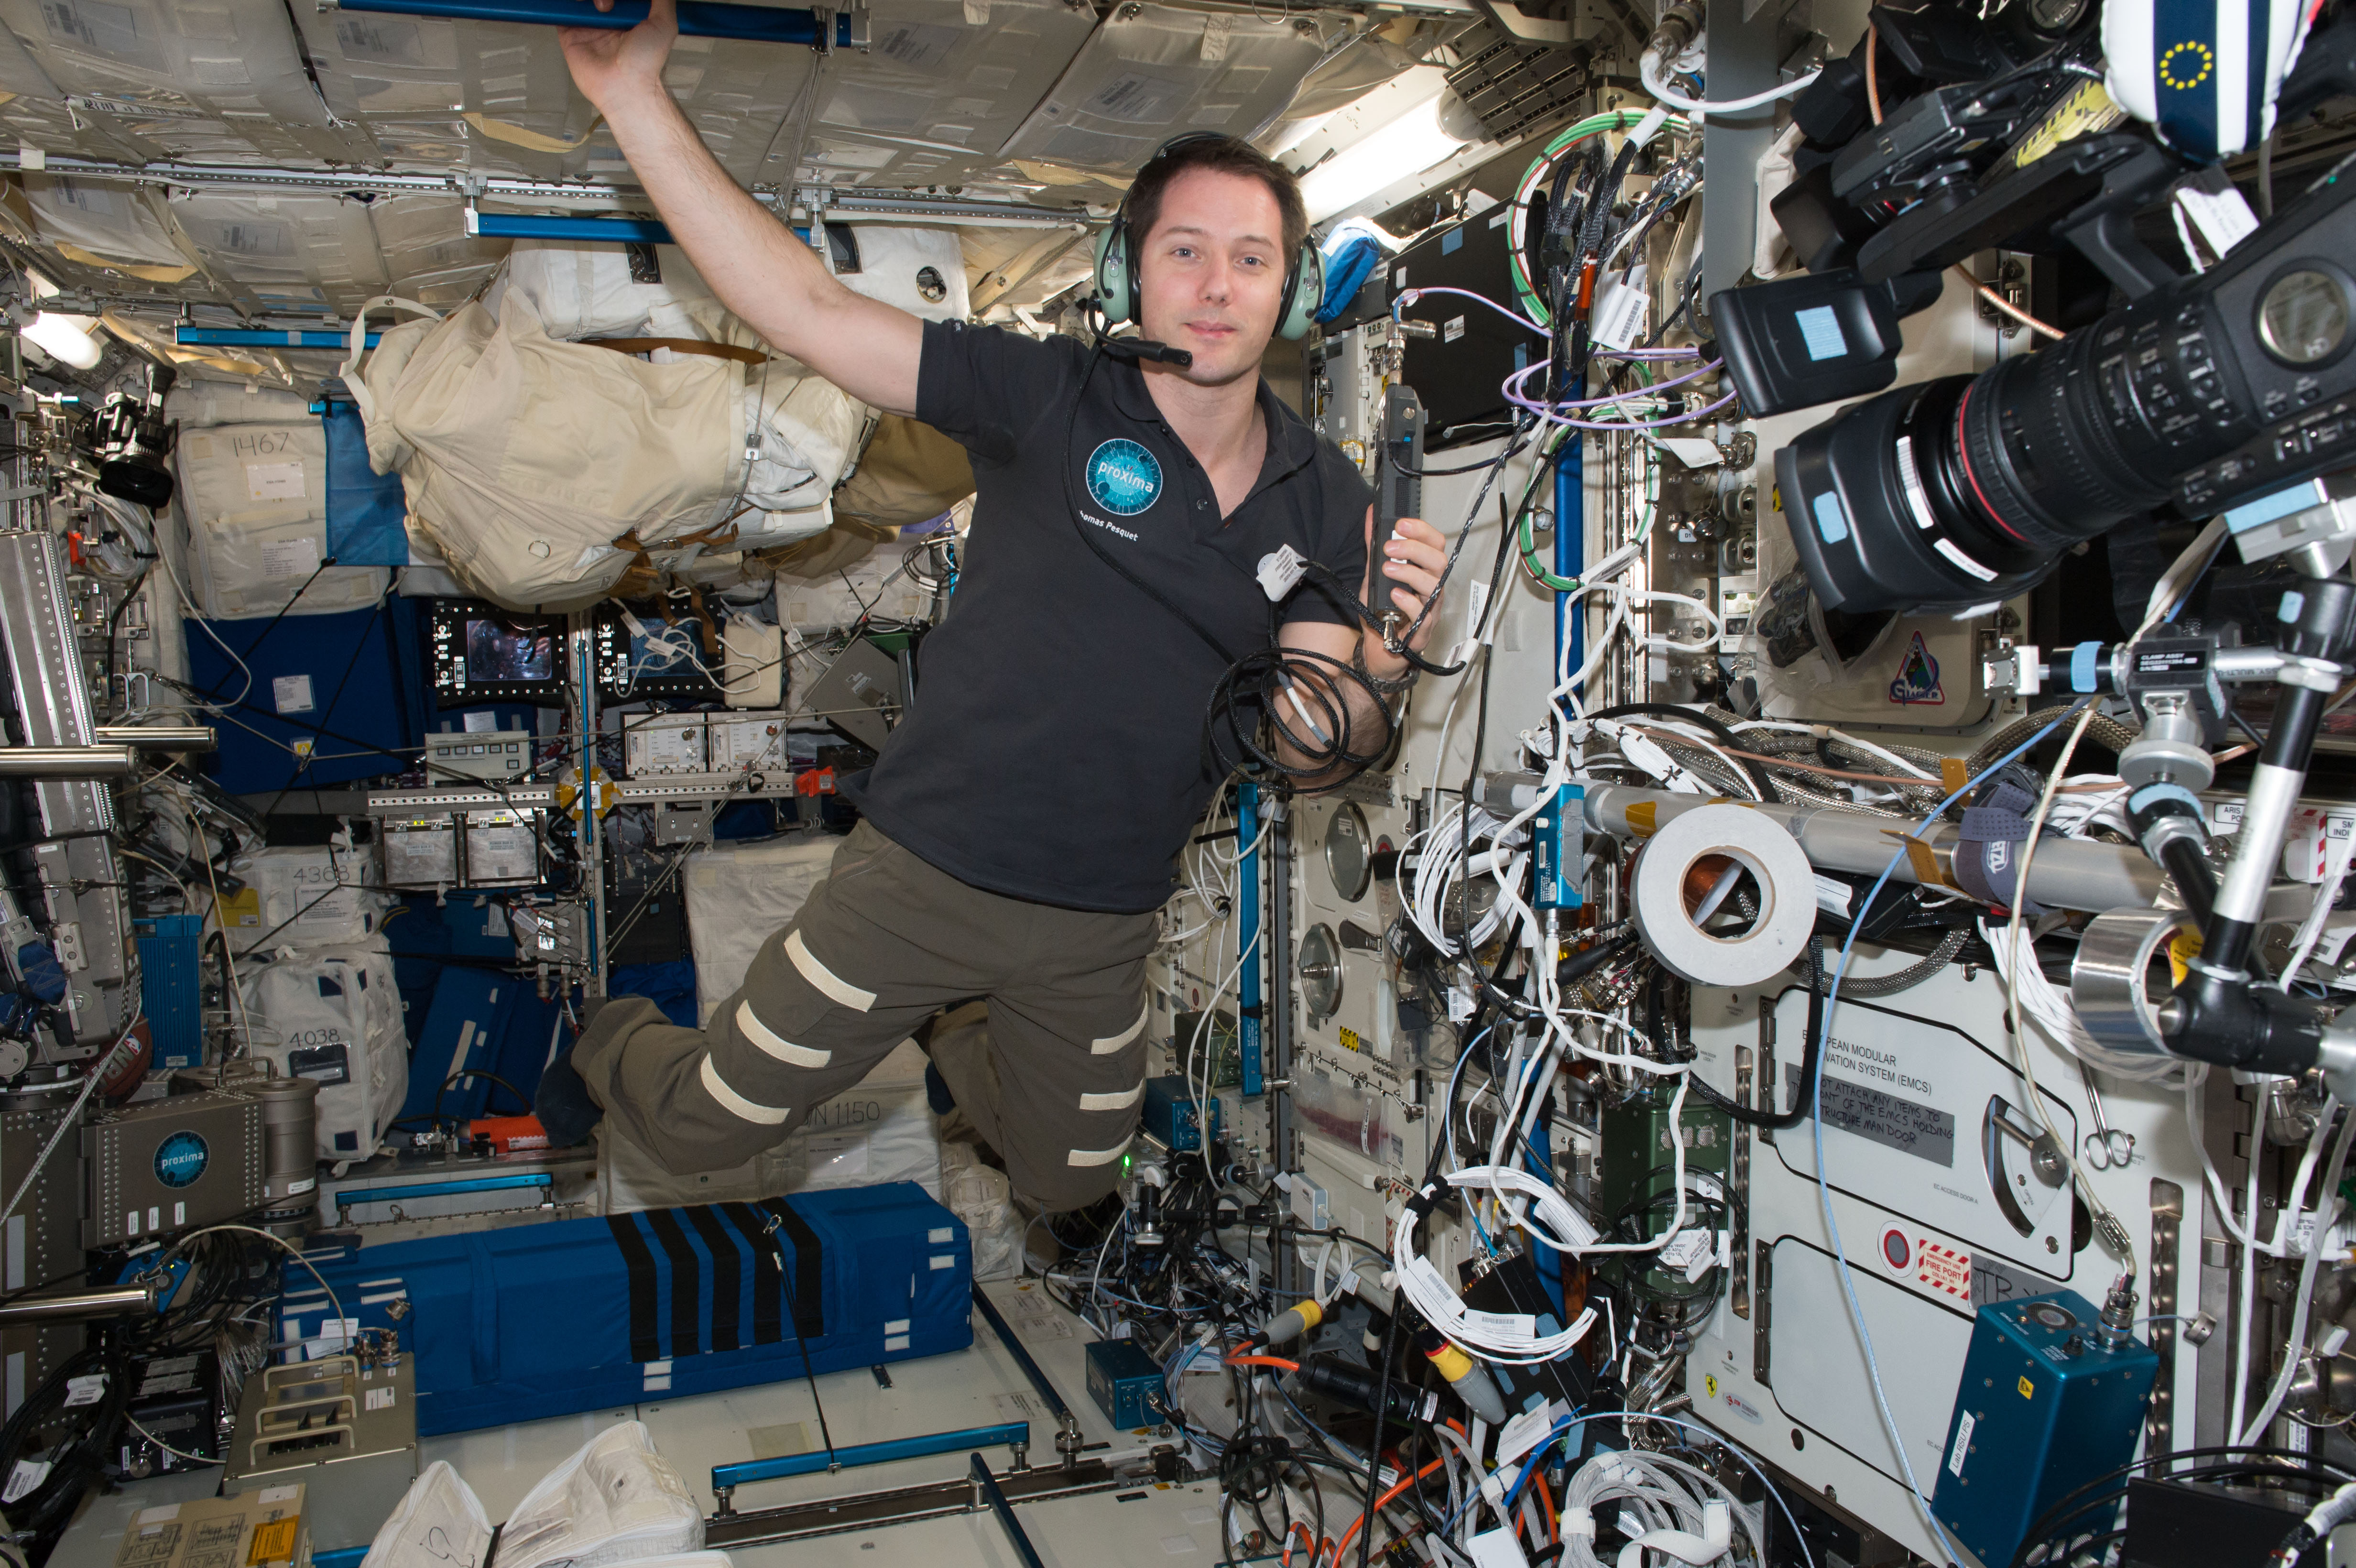 Ham radio aboard the International Space Station